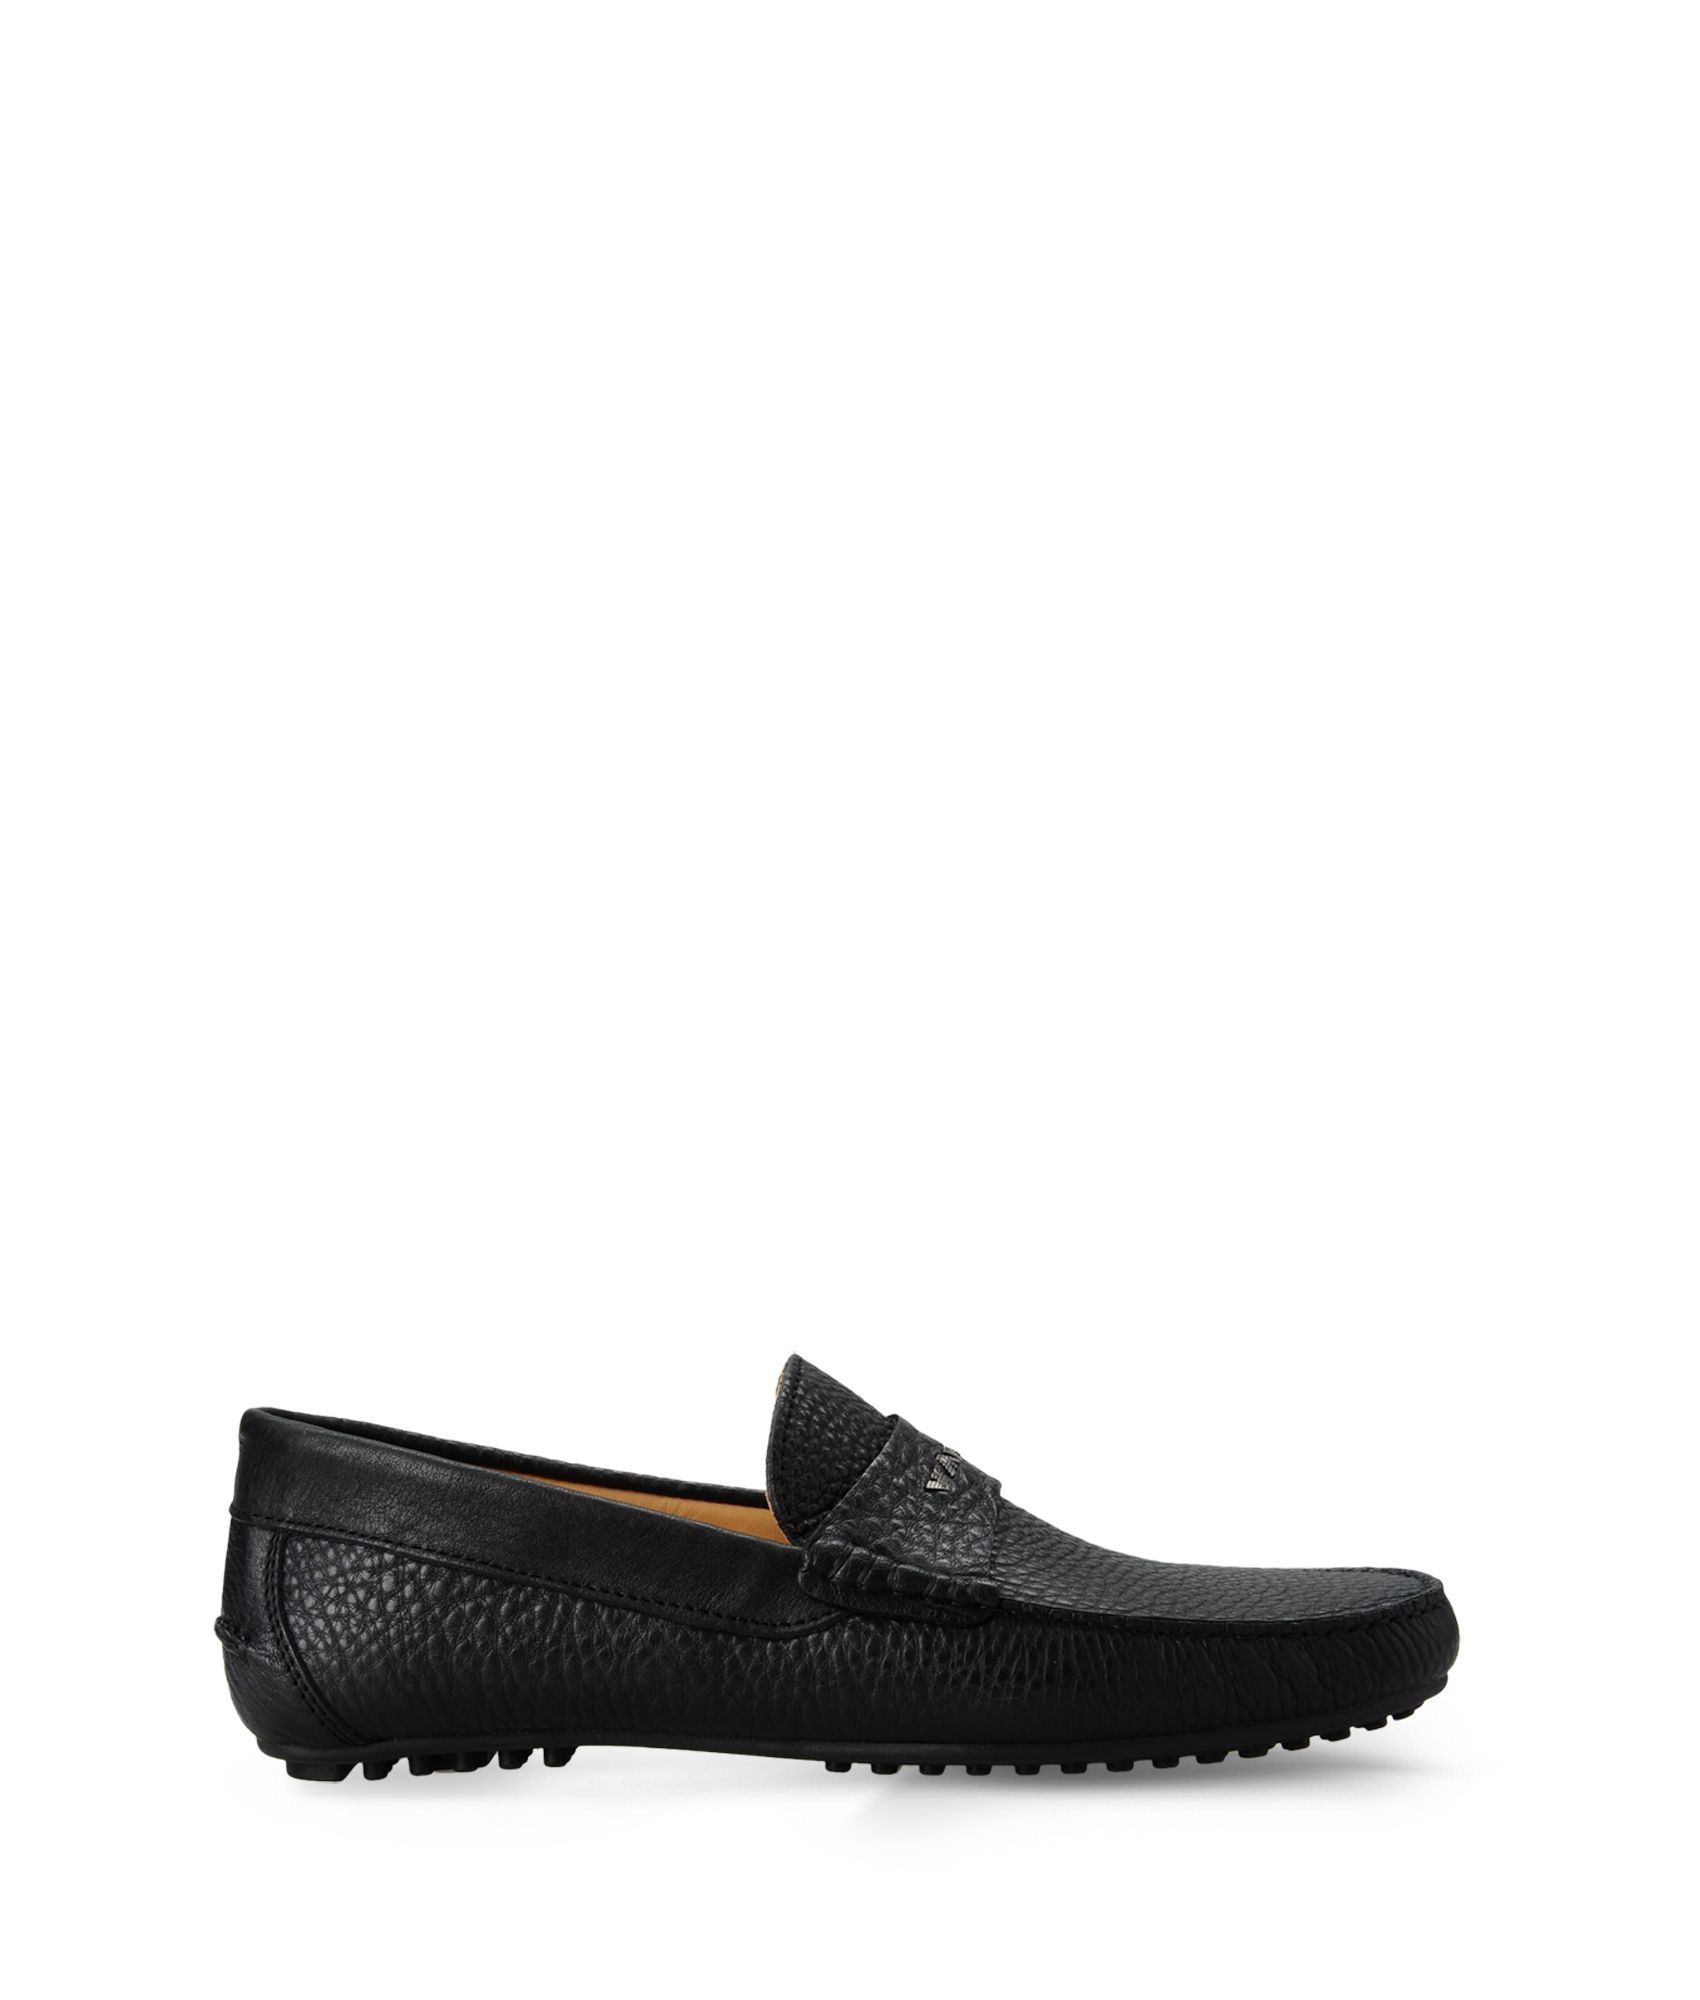 Emporio Armani Loafers in Black for Men - Lyst